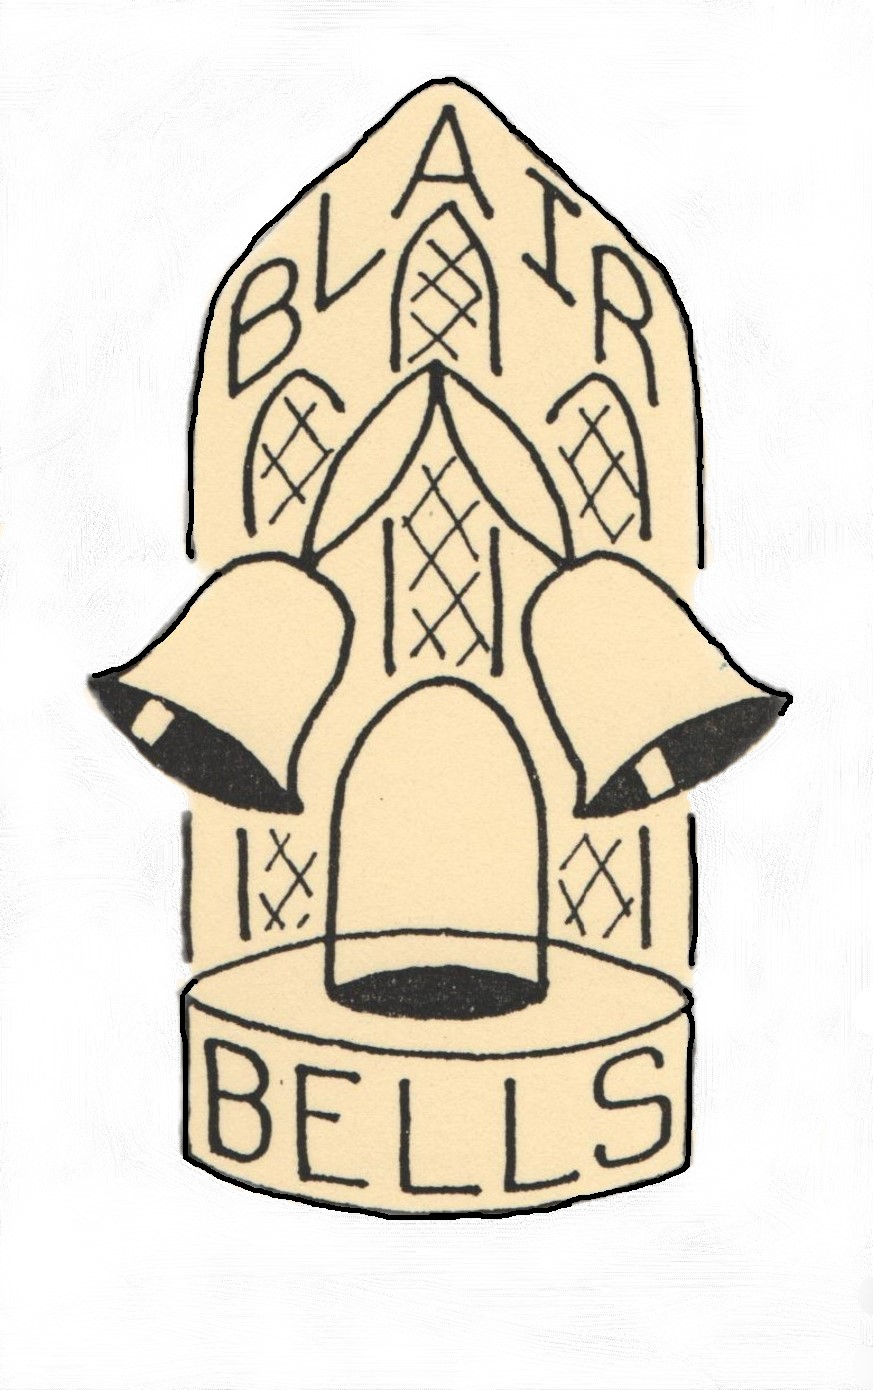 Blair Bells